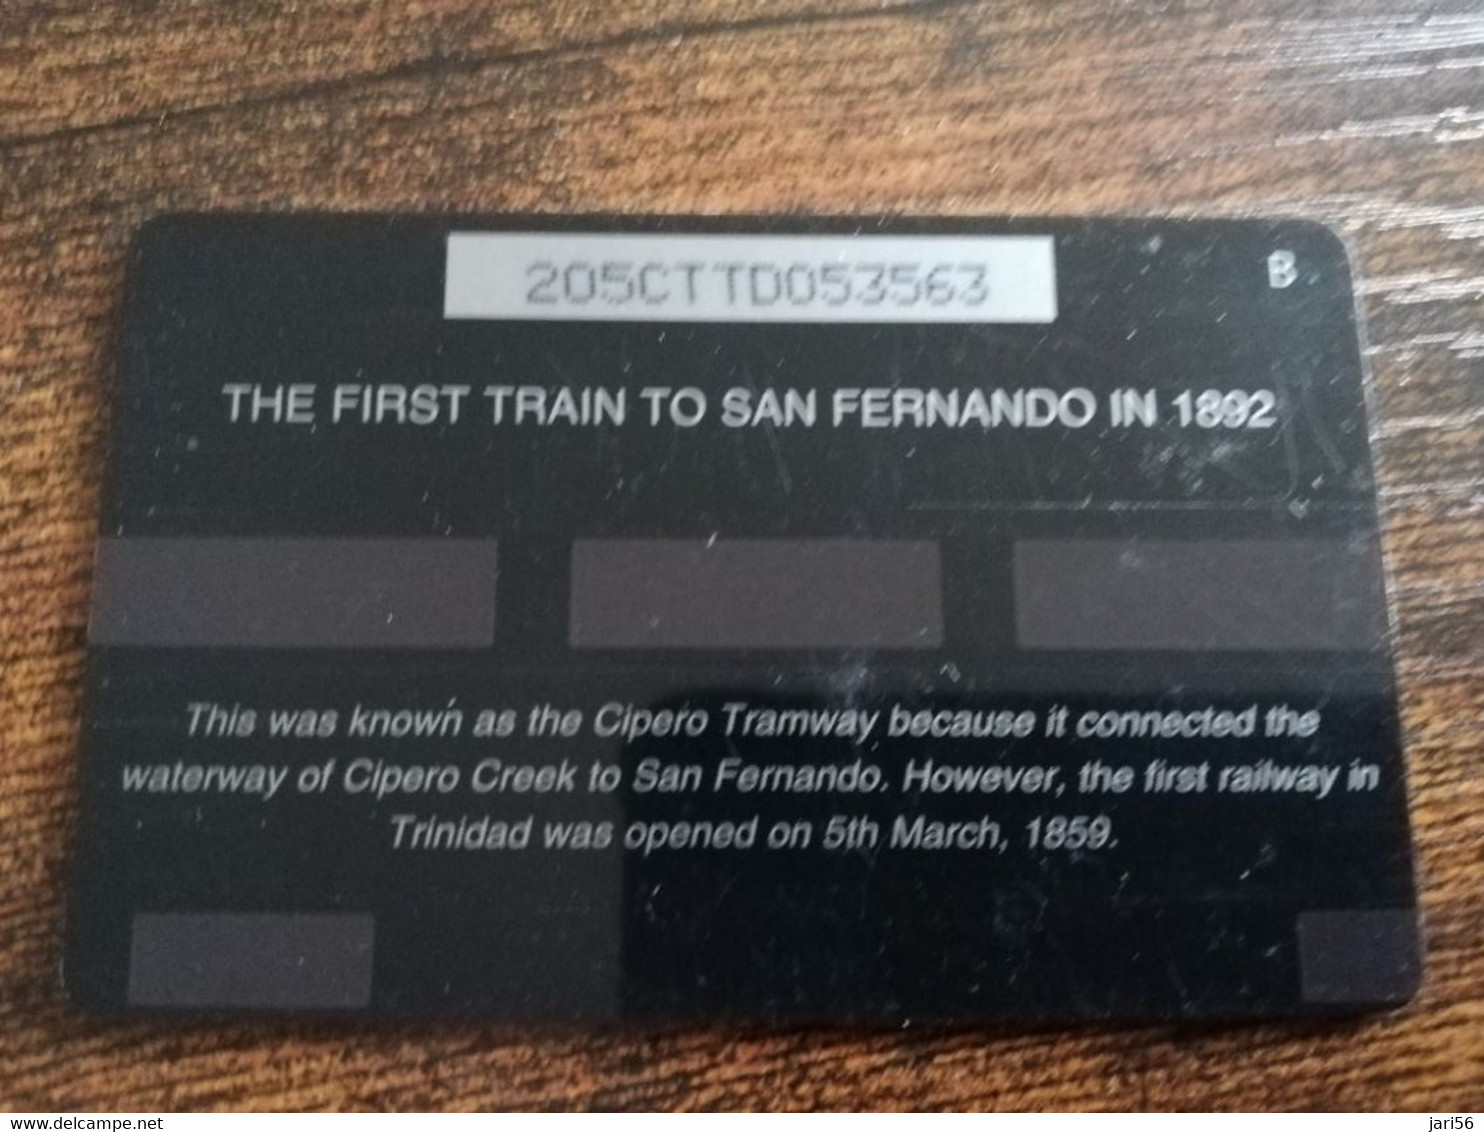 TRINIDAD & TOBAGO  GPT CARD    $20,-  205CCTD    FIRST TRAIN IN SAN FERNANDO             Fine Used Card        ** 8905** - Trinidad & Tobago